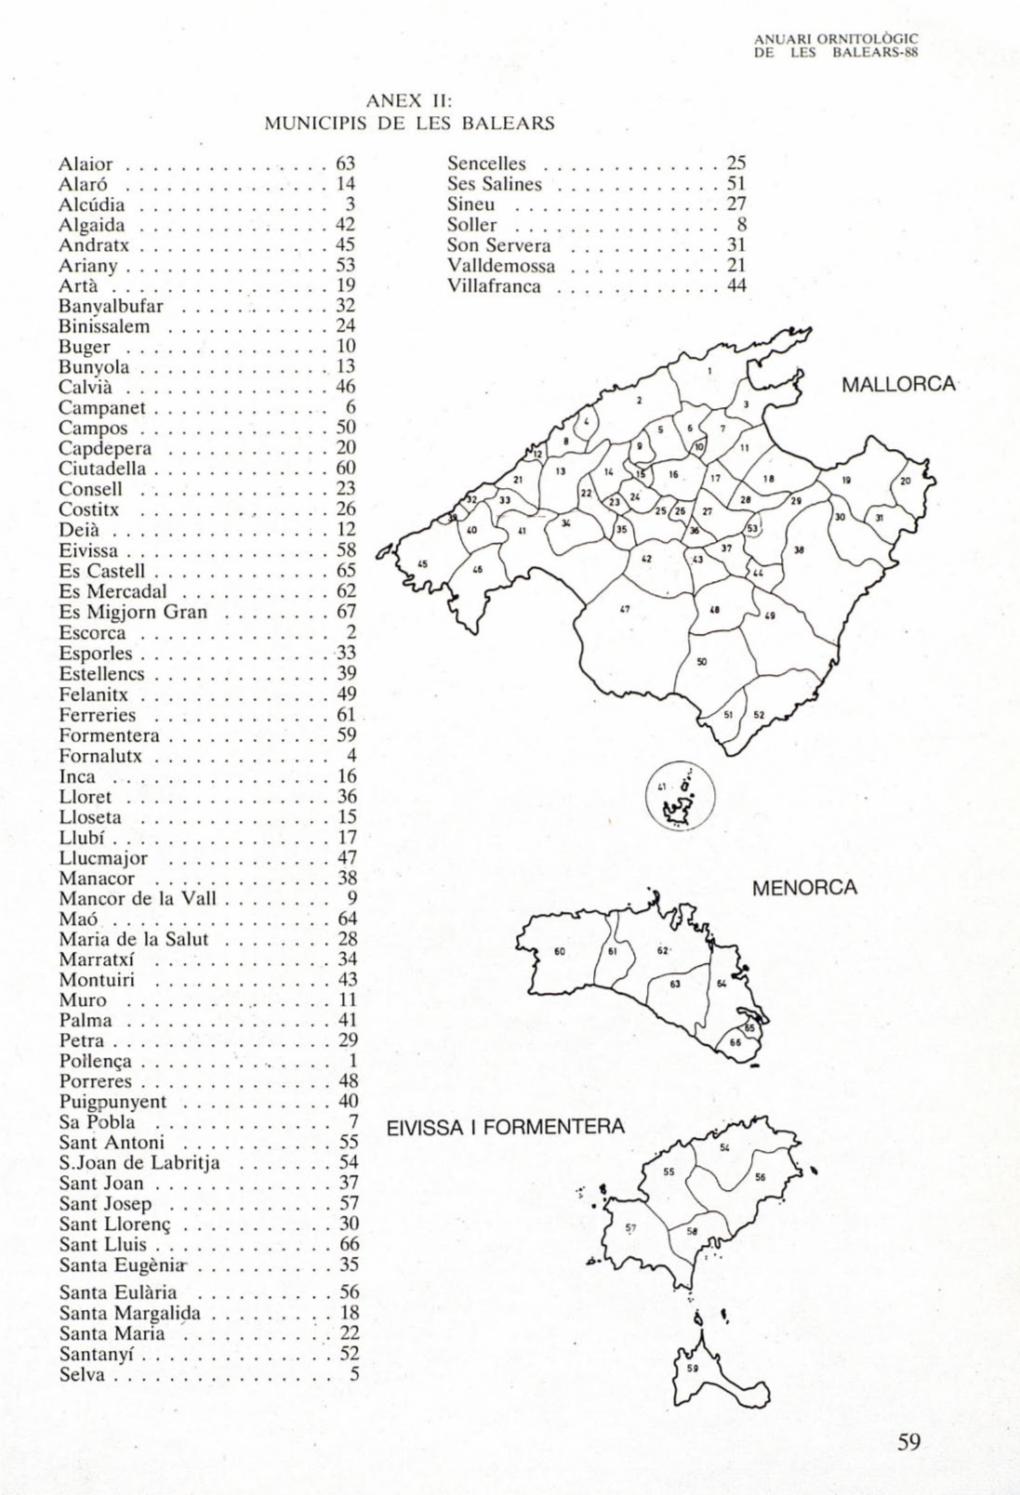 Annex II: Municipis De Les Balears